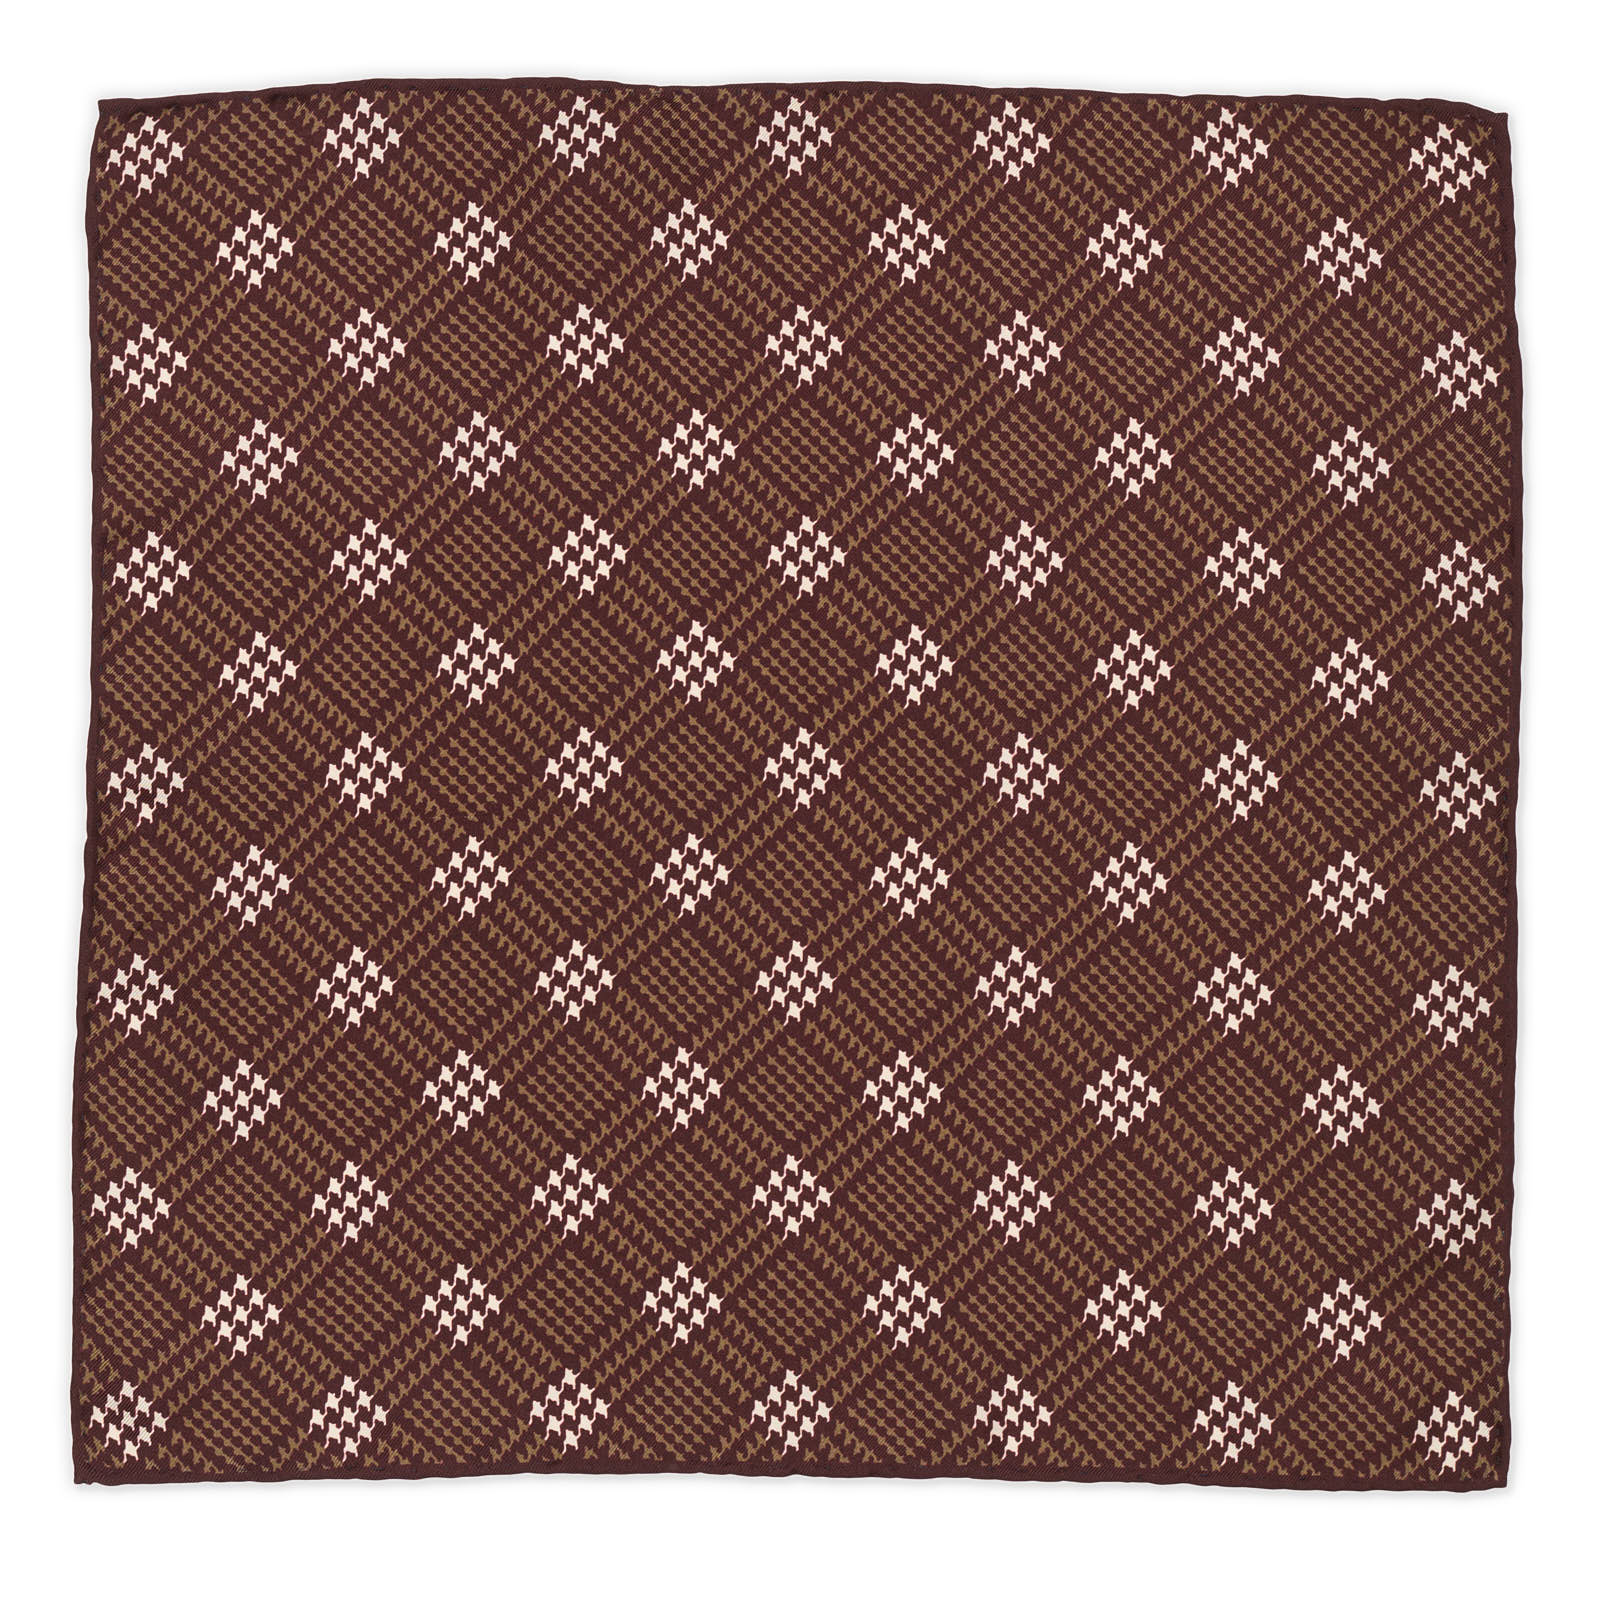 VANNUCCI Milano Handmade Brown Houndstooth Silk Pocket Square NEW 32cm x 31cm